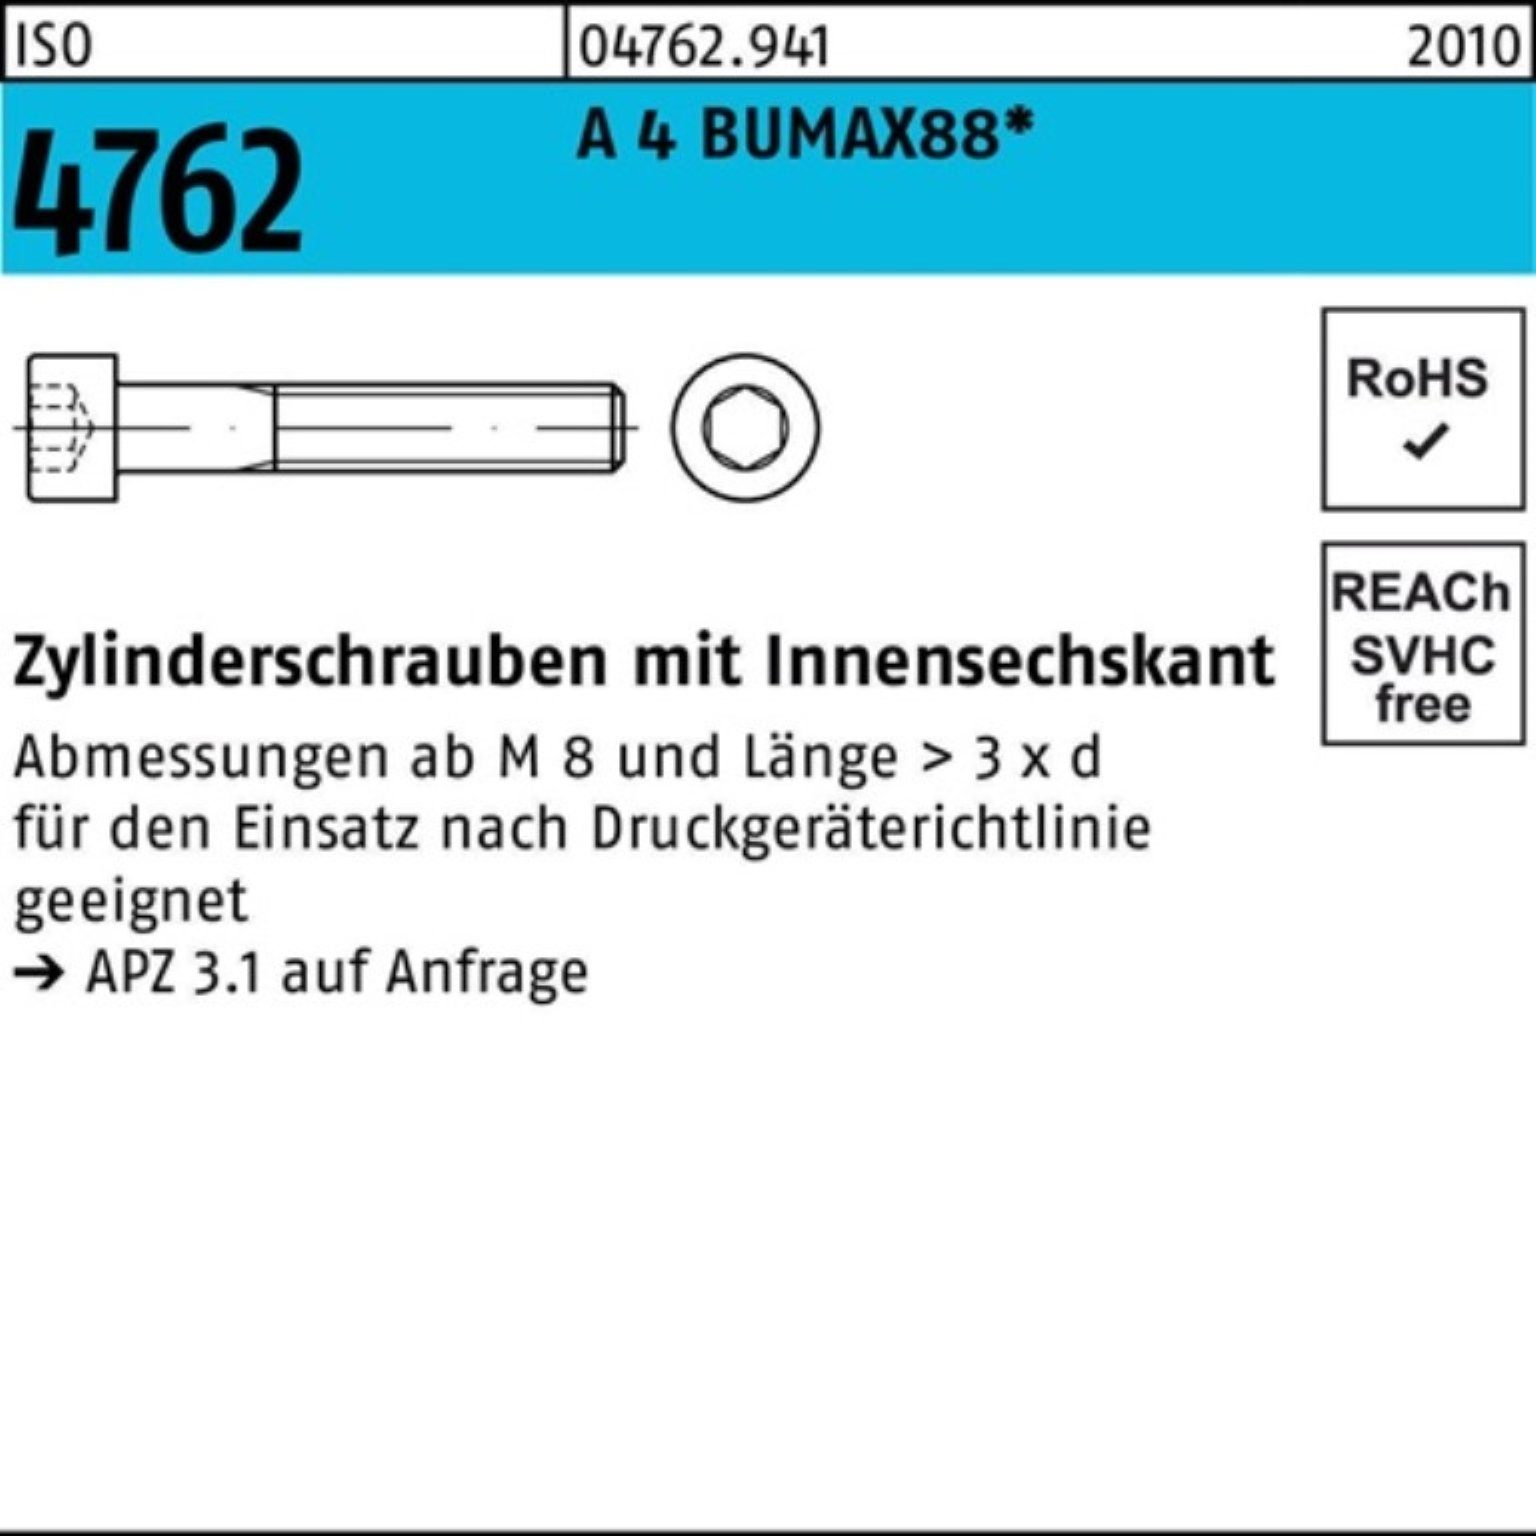 Bufab Zylinderschraube 4 50 4762 25 Zylinderschraube ISO M12x BUMAX88 Innen-6kt A Pack 100er